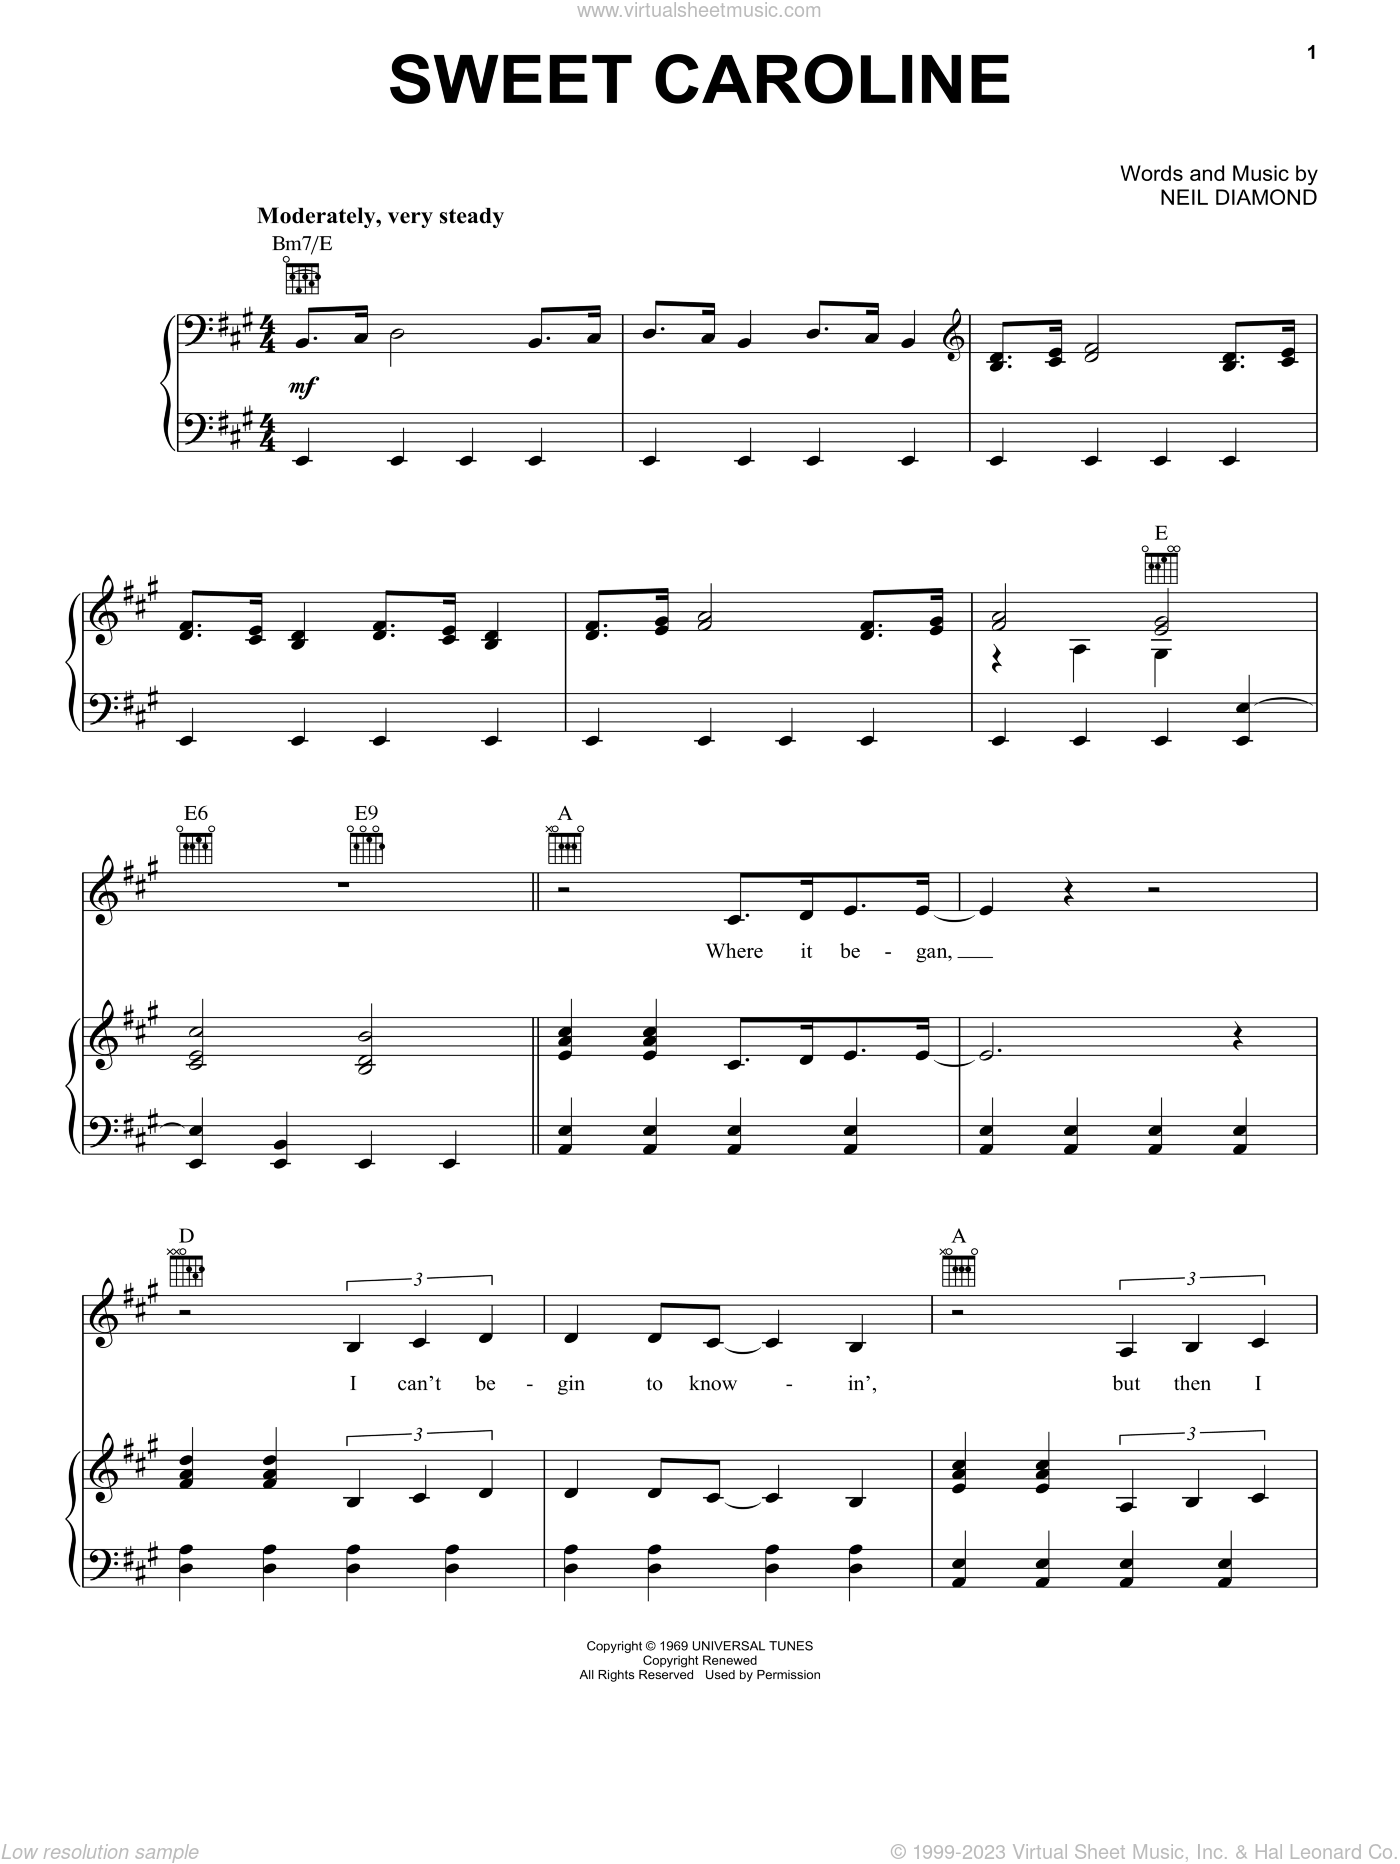 Play Me by Neil Diamond - Easy Guitar Tab - Guitar Instructor